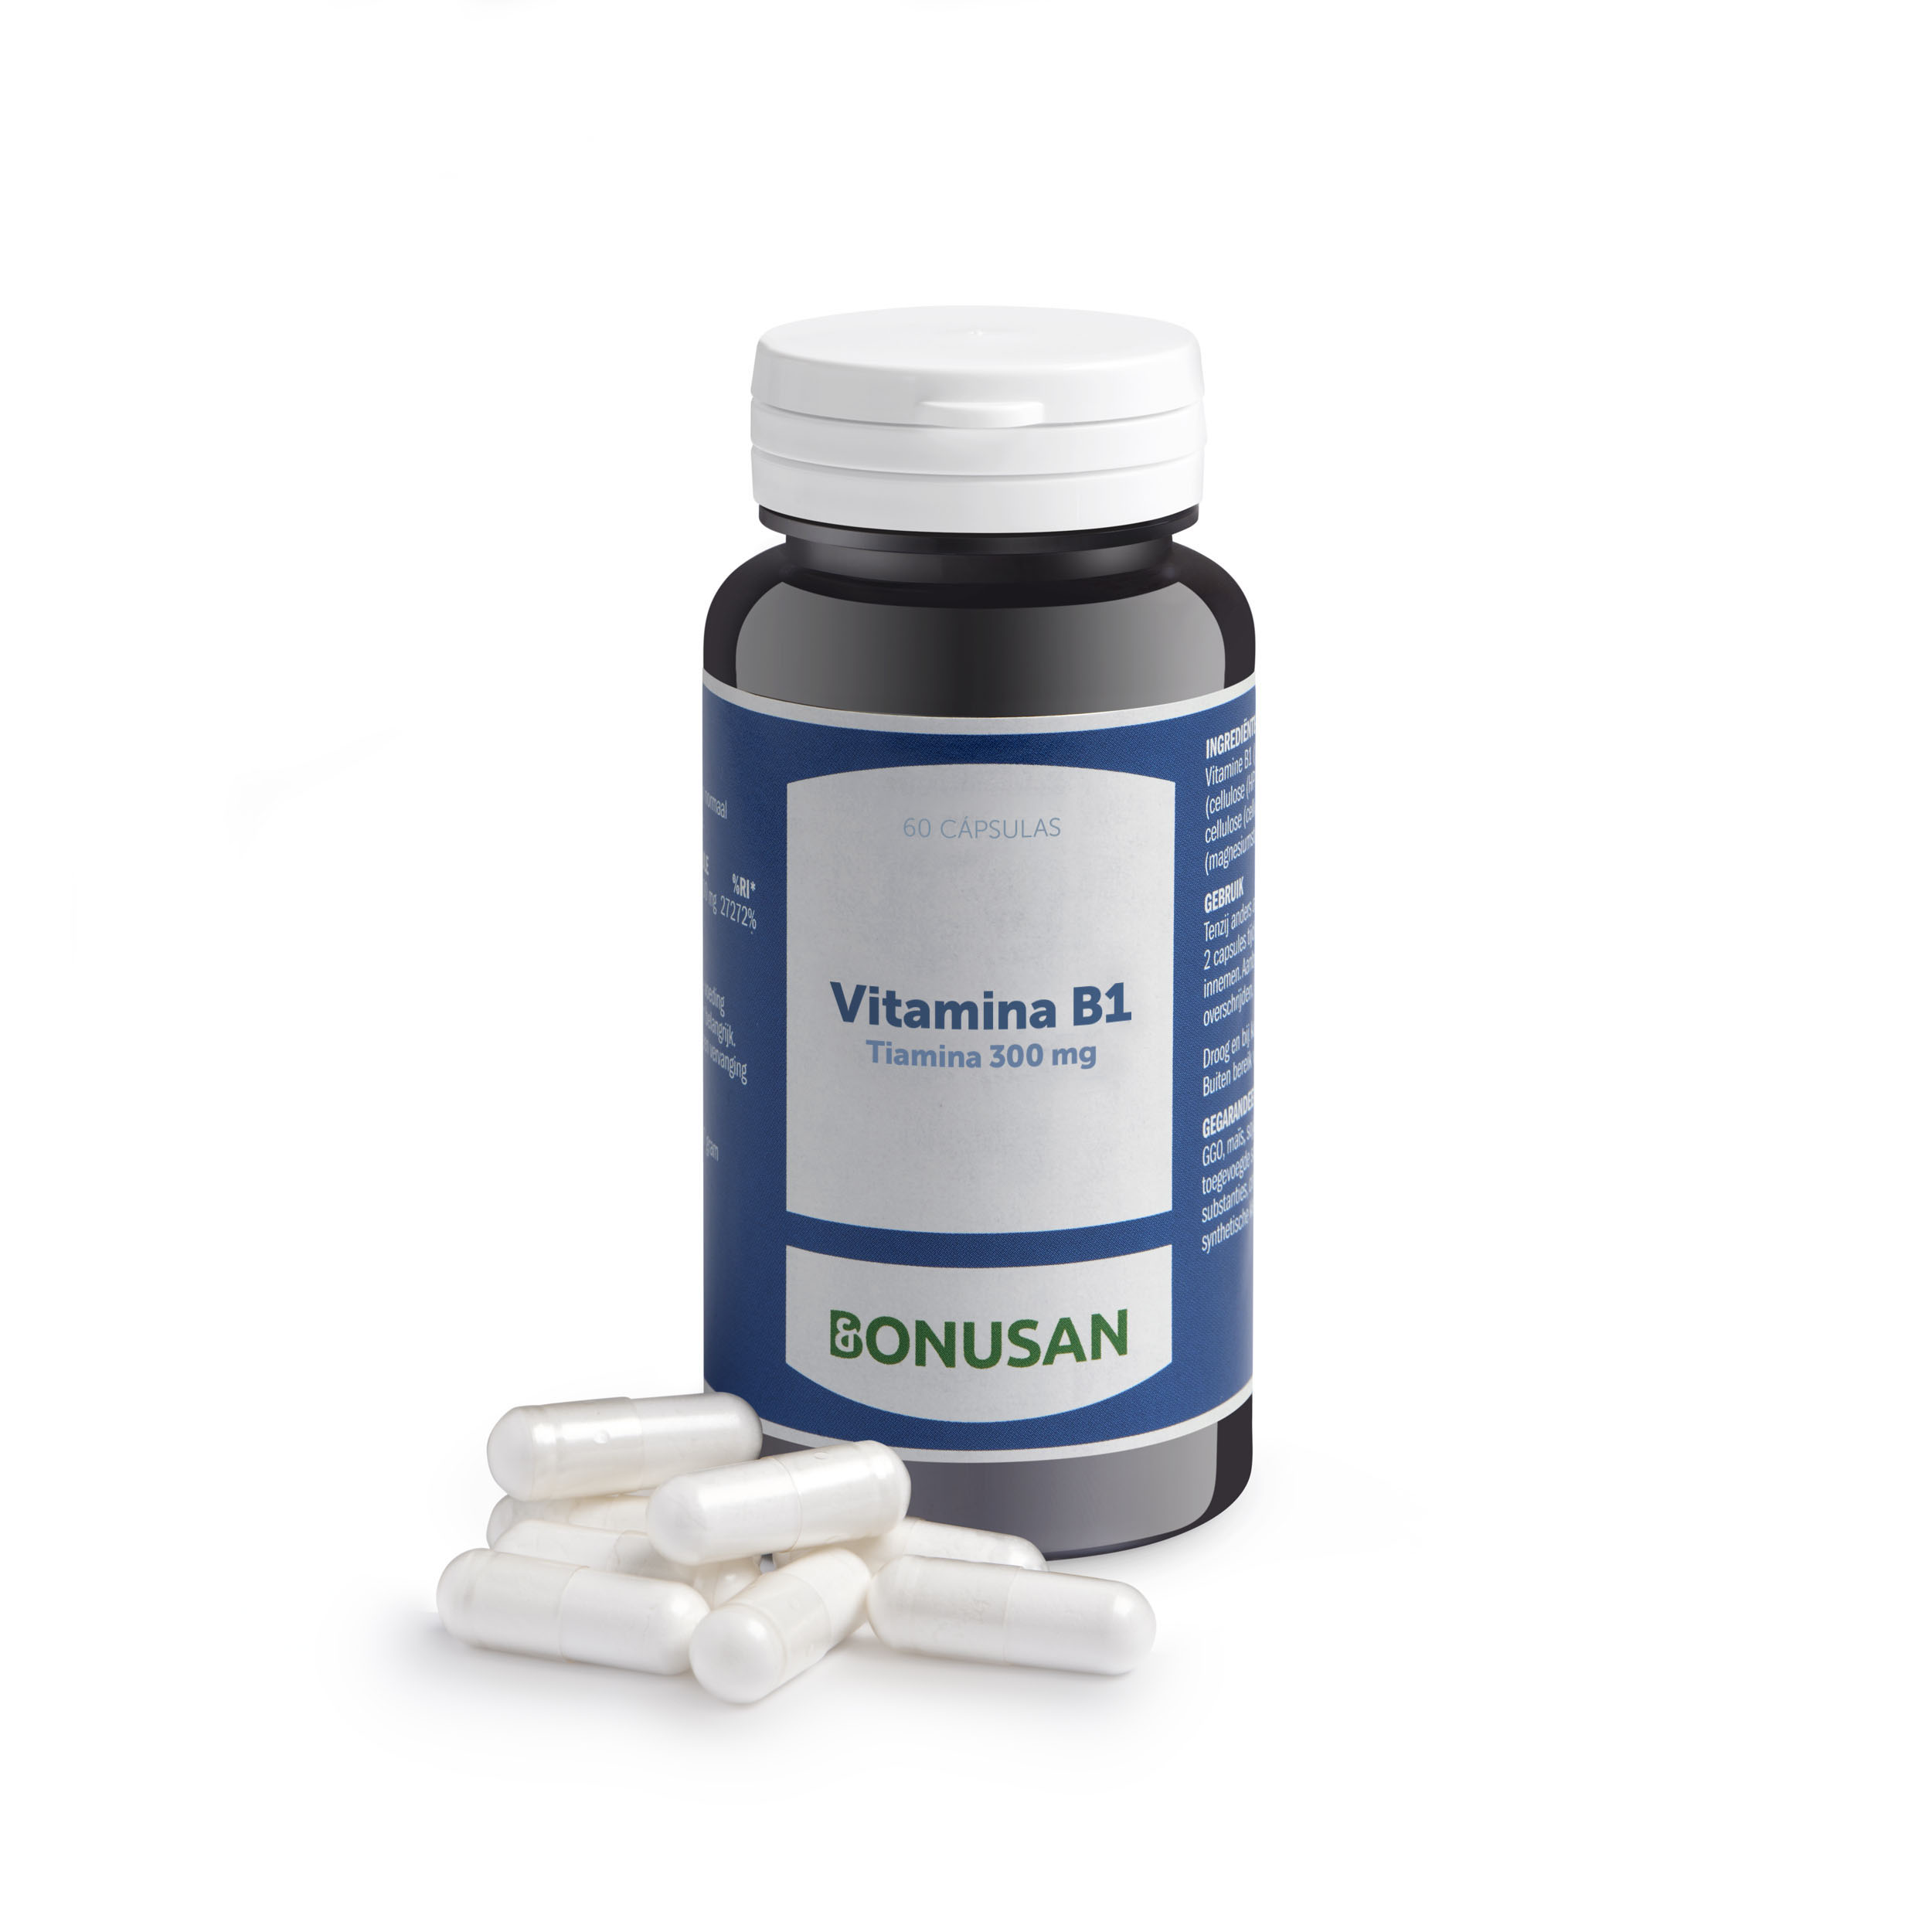 Vitamina B1 Tiamina 300 mg